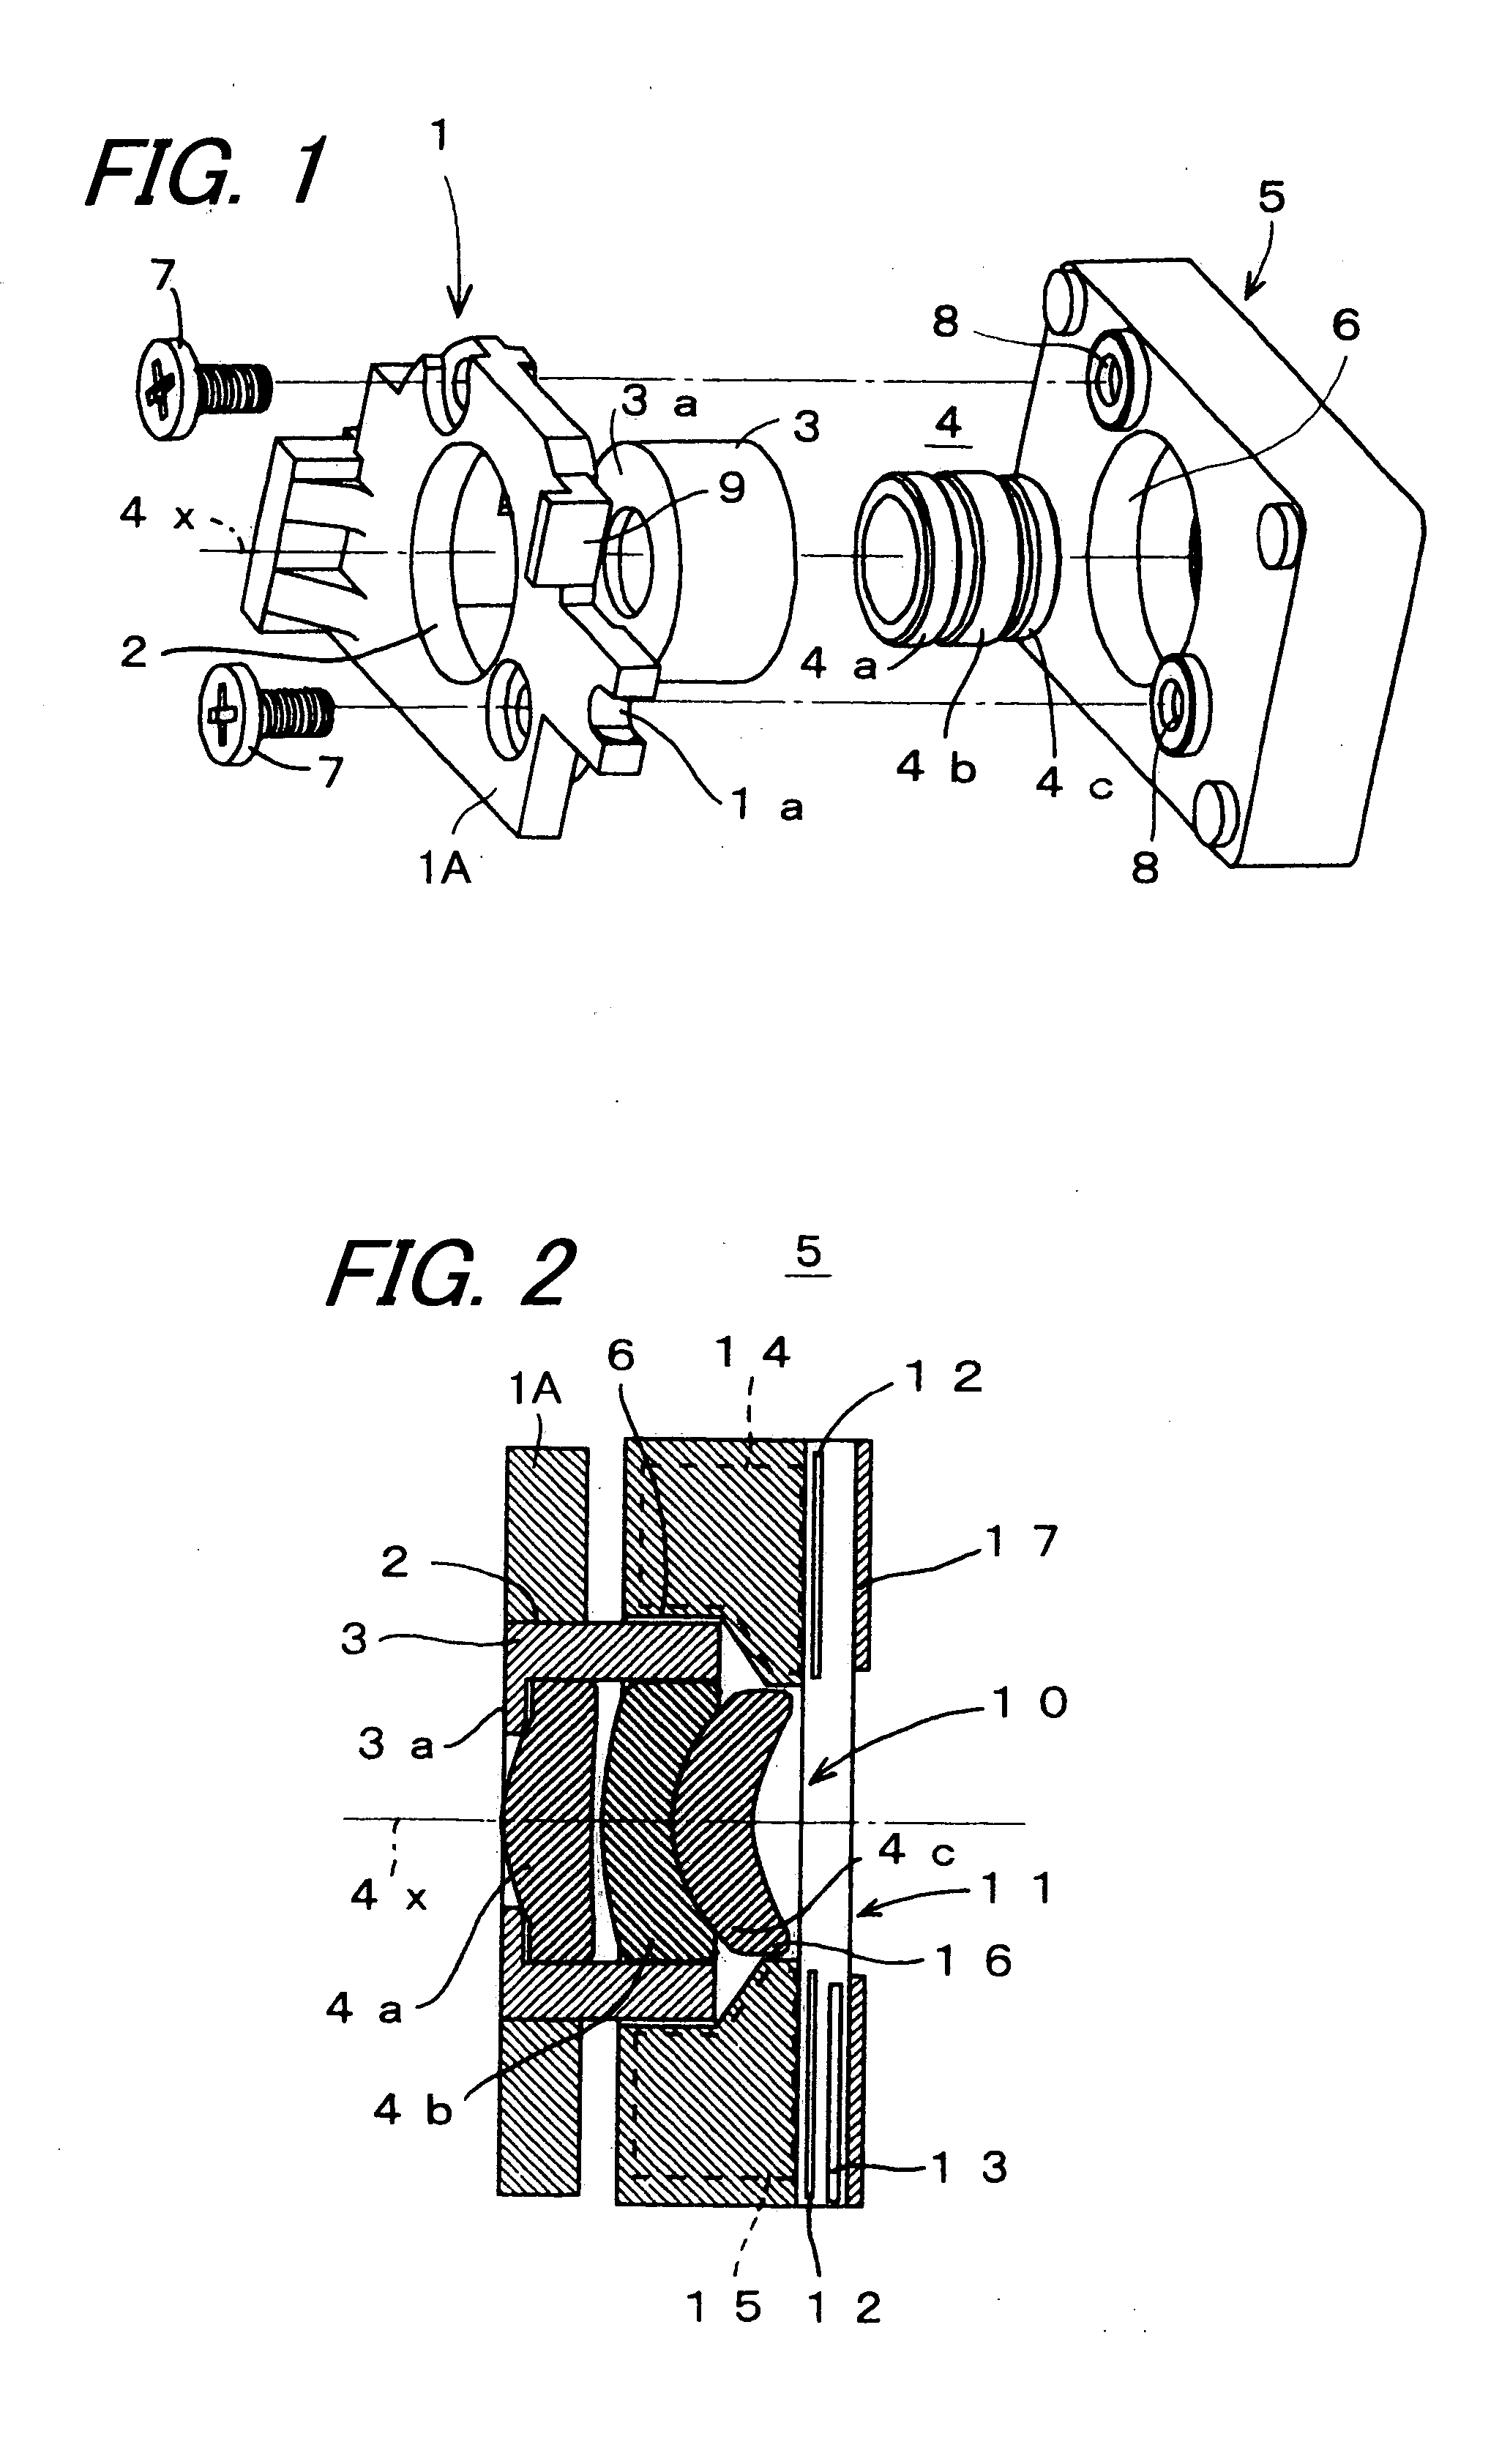 Lens-shutter coupling unit